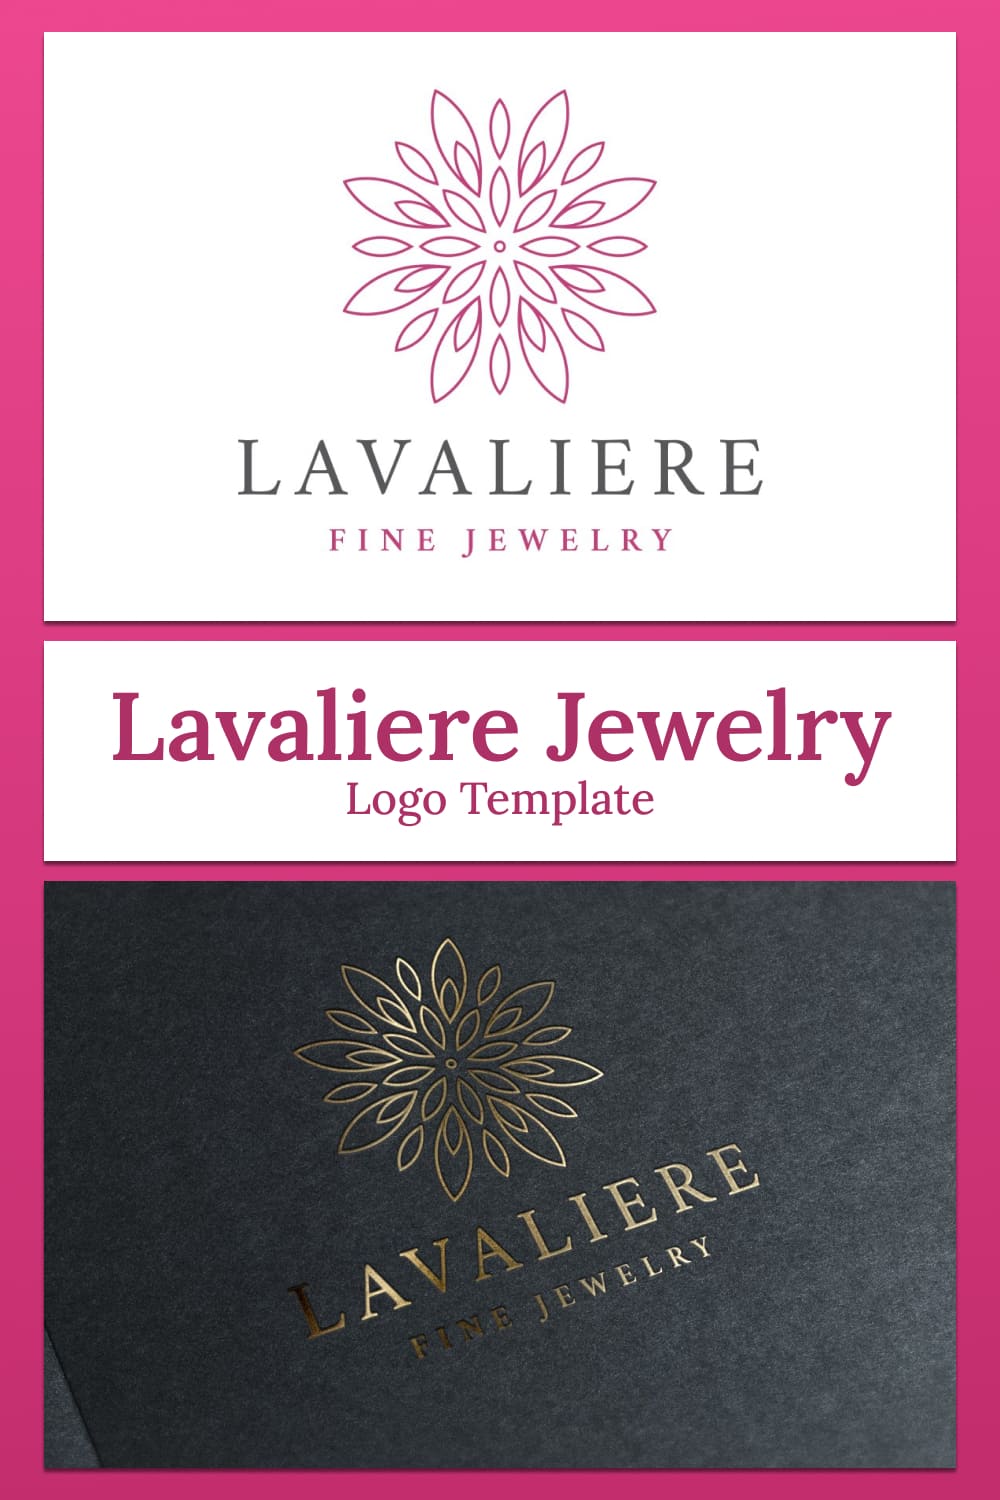 lavaliere jewelry logo template unique design for your brand.